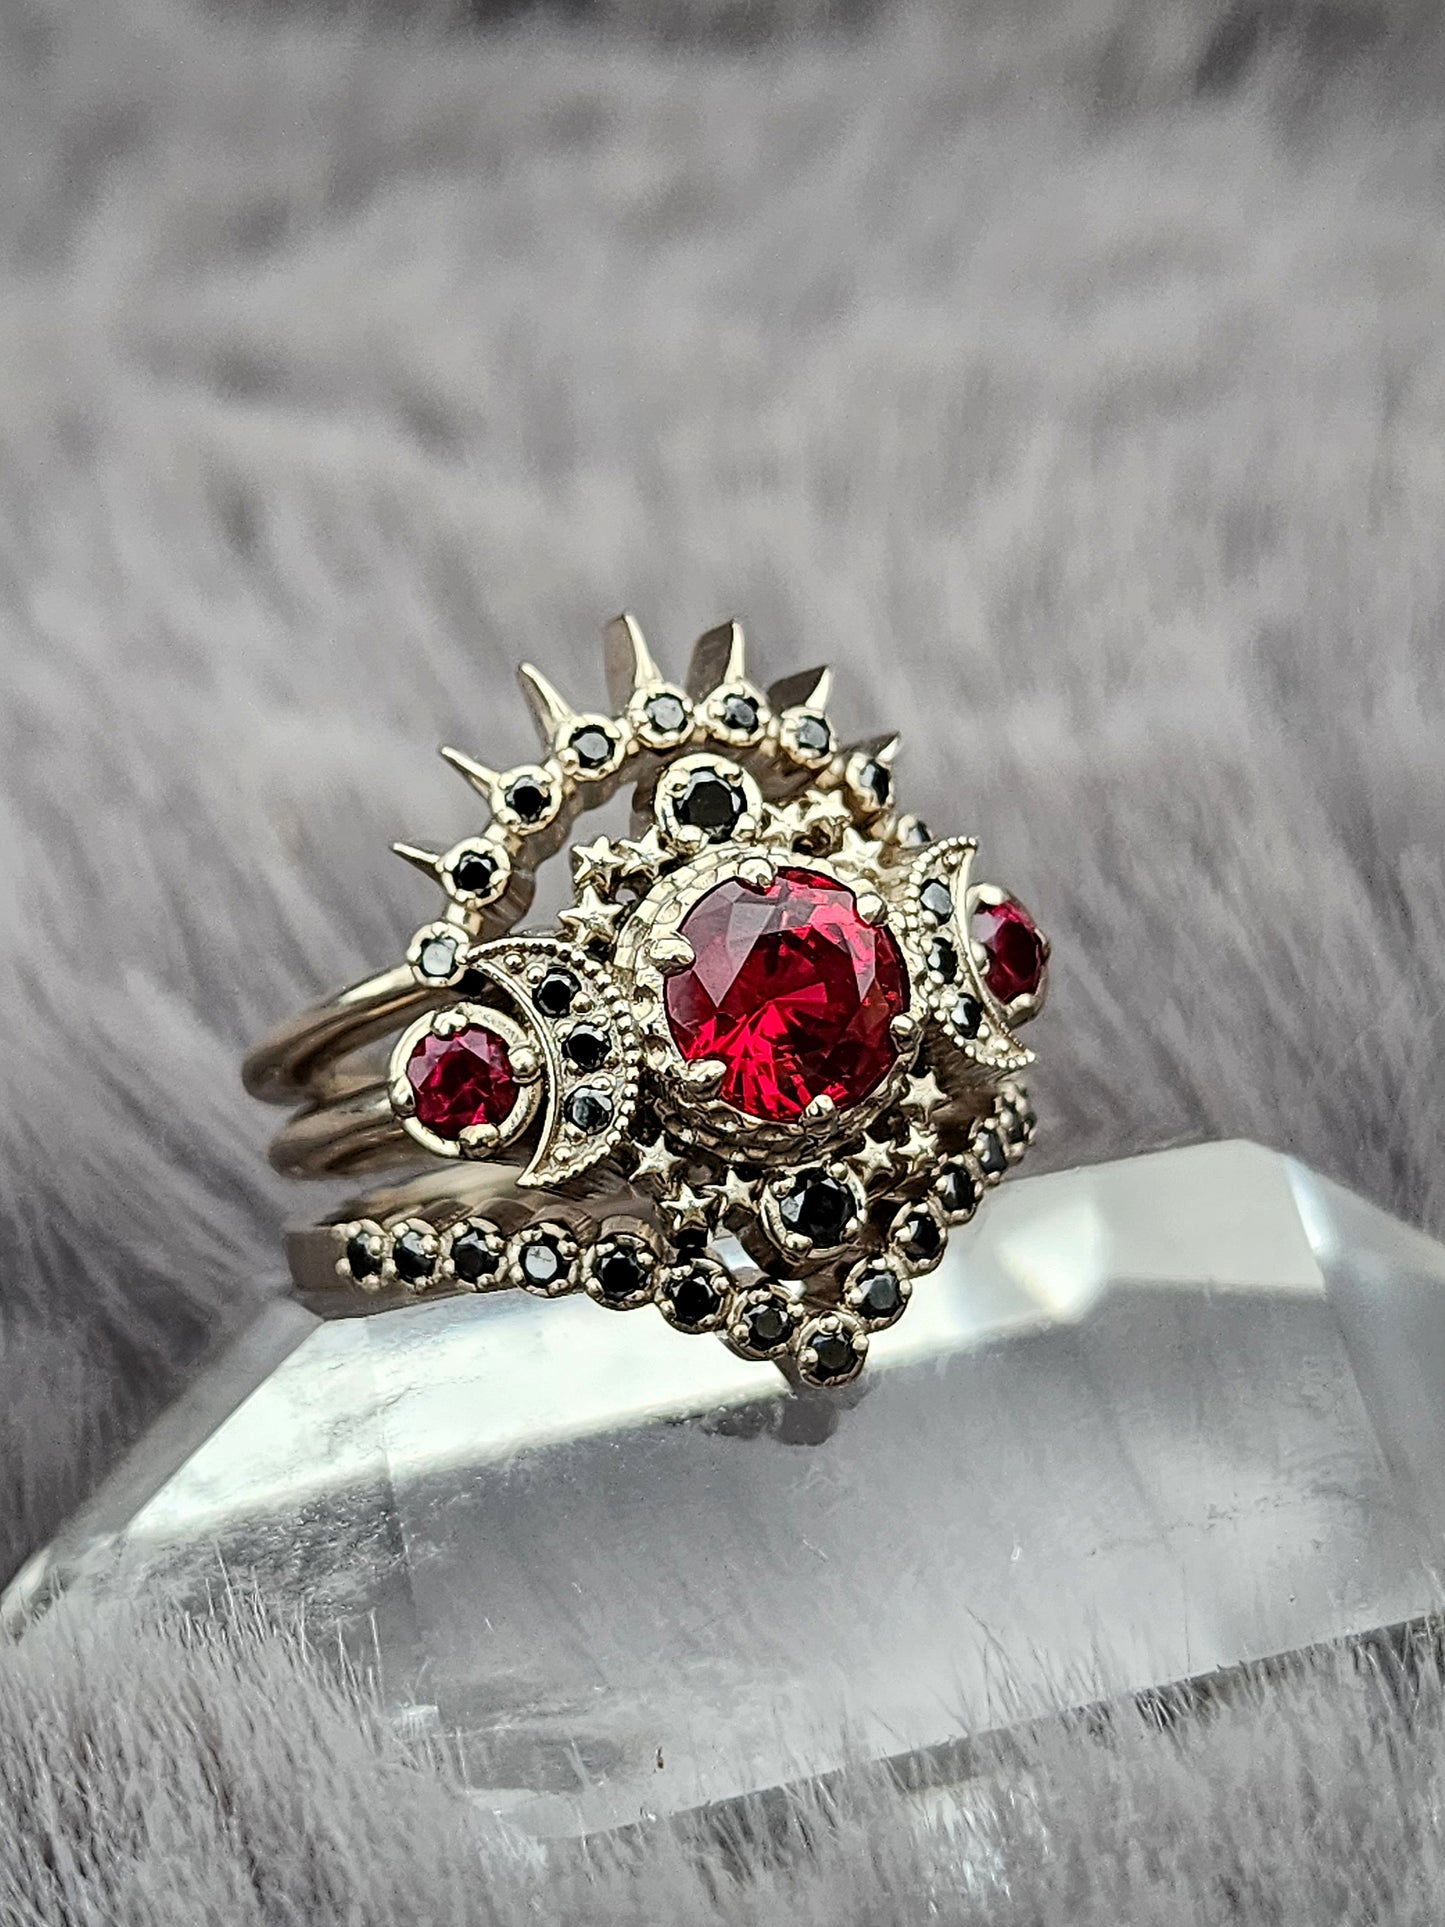 Blood Moon Black Diamond & Ruby Cosmos White Gold Moon Engagement Ring Set - Gothic Pagan Wedding Rings - Fine Handmade Jewelry